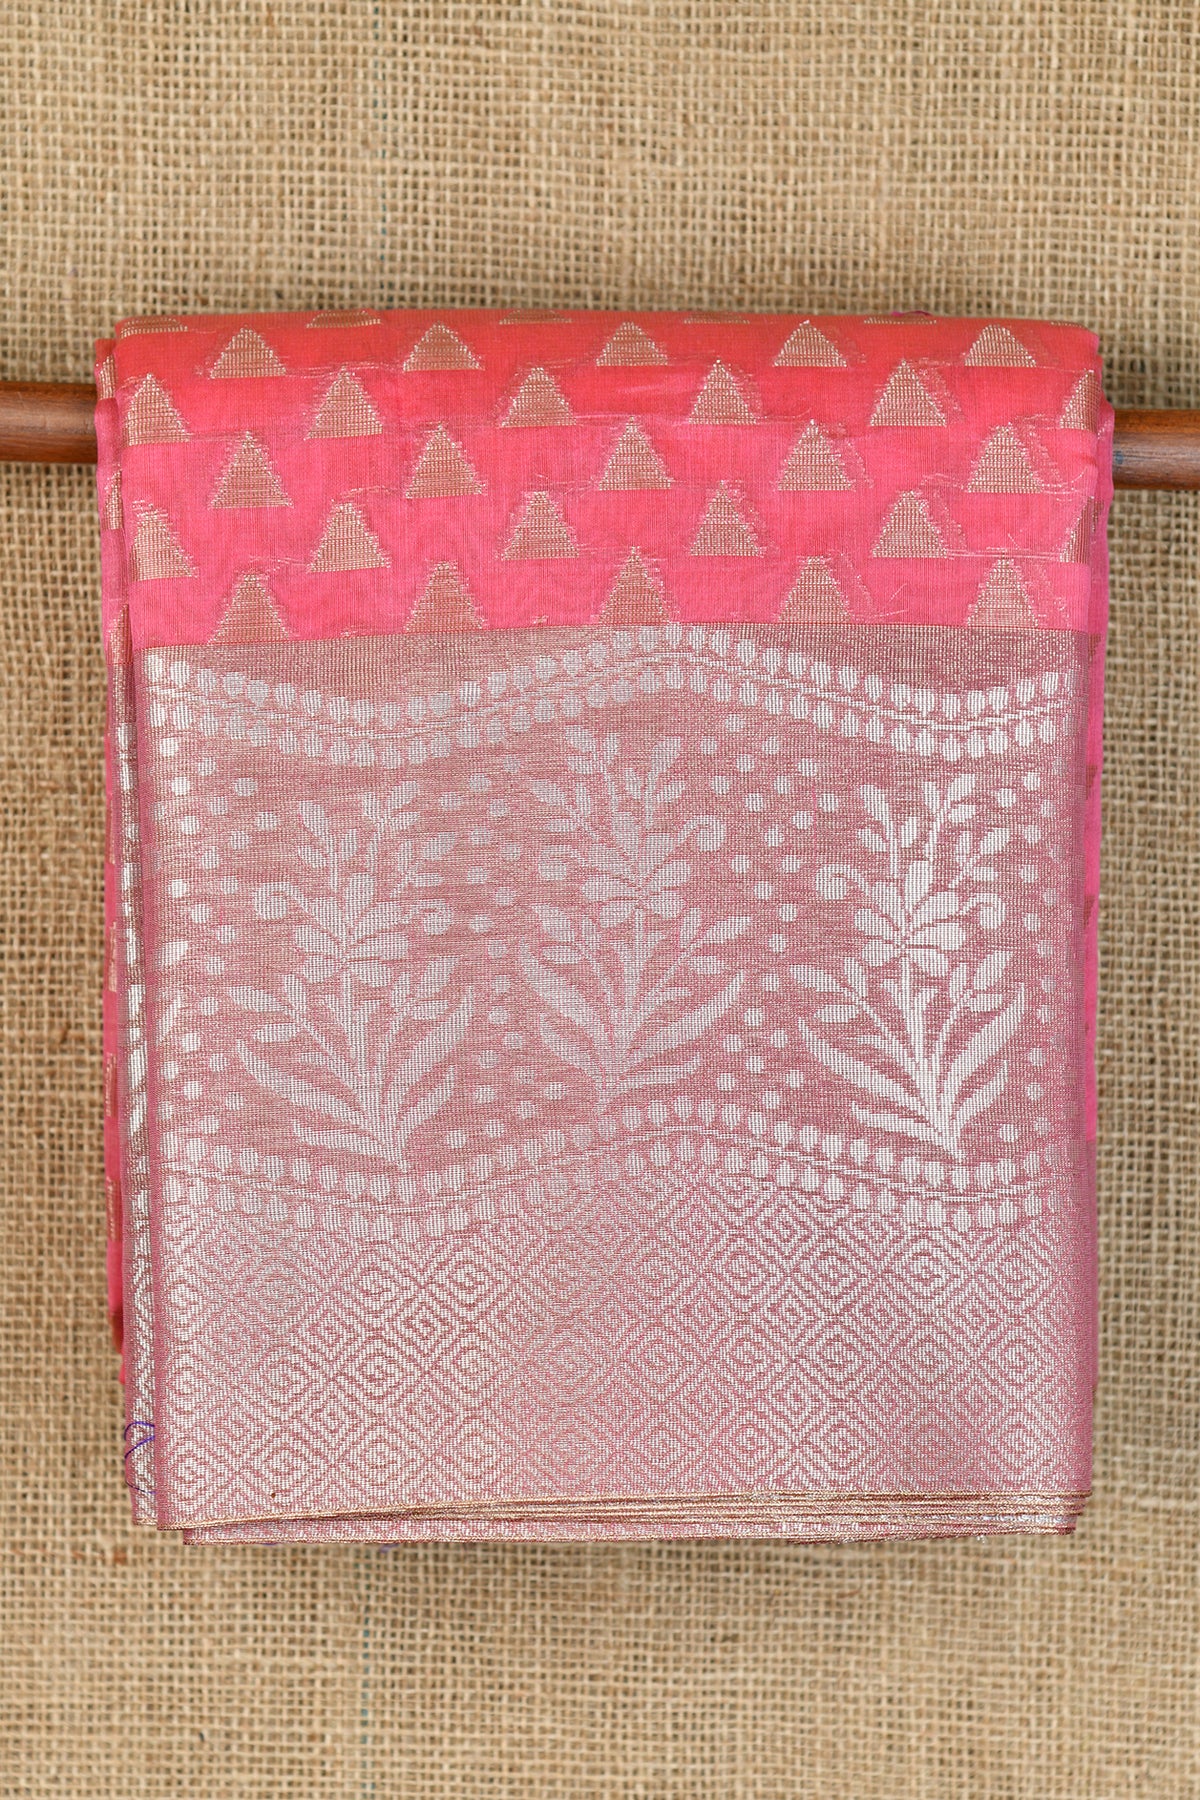 Silver Zari Floral Border With Triangle Buttis Bubblegum Pink Semi Banaras Silk Saree